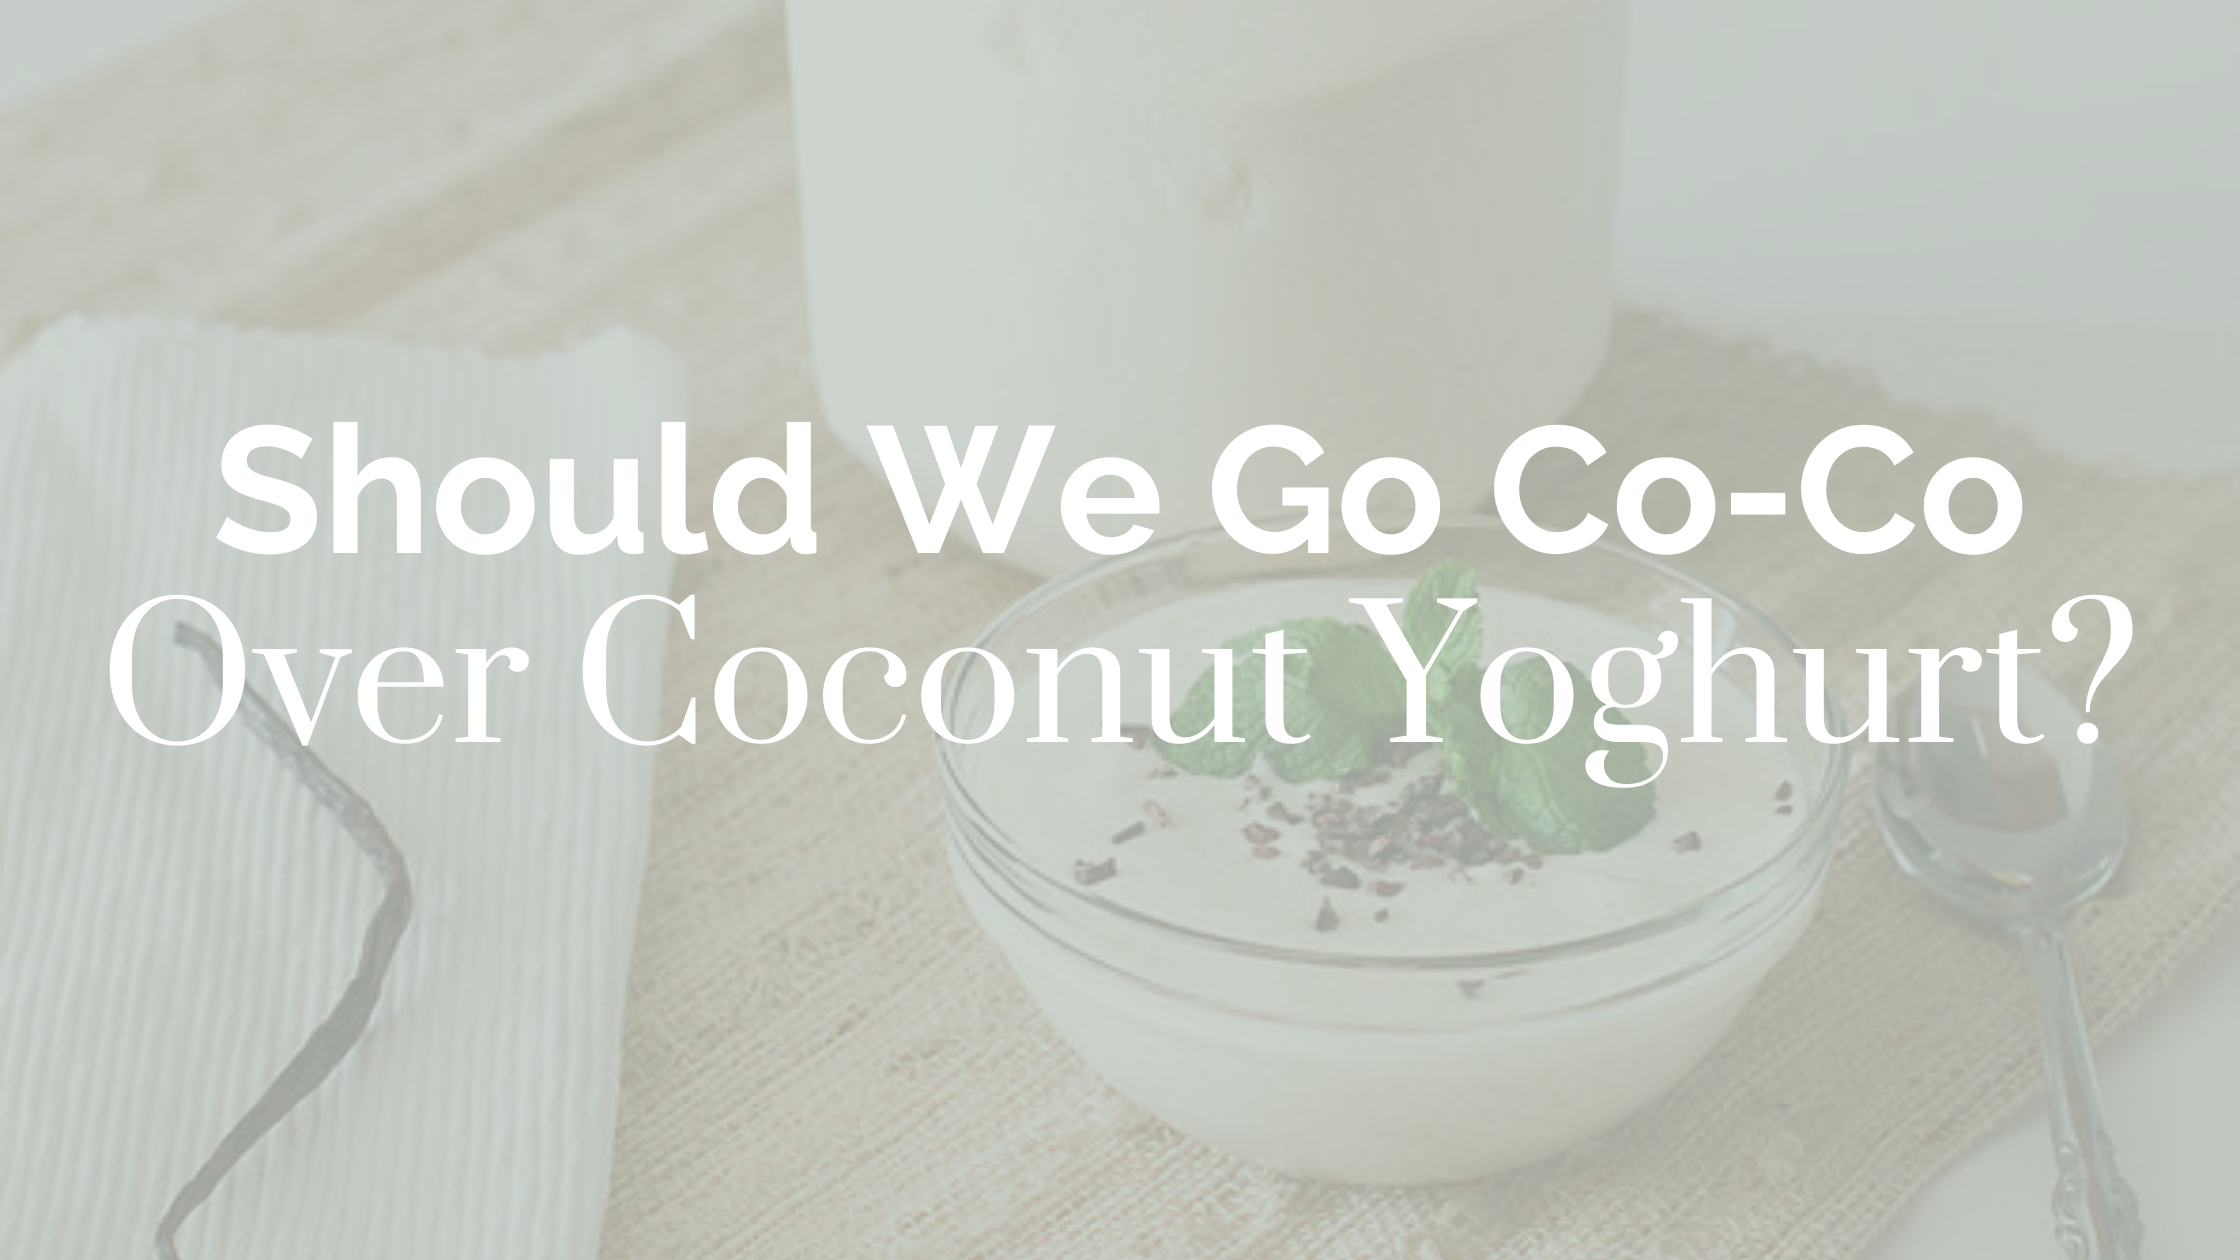 Should we go coco over coconut yoghurt?